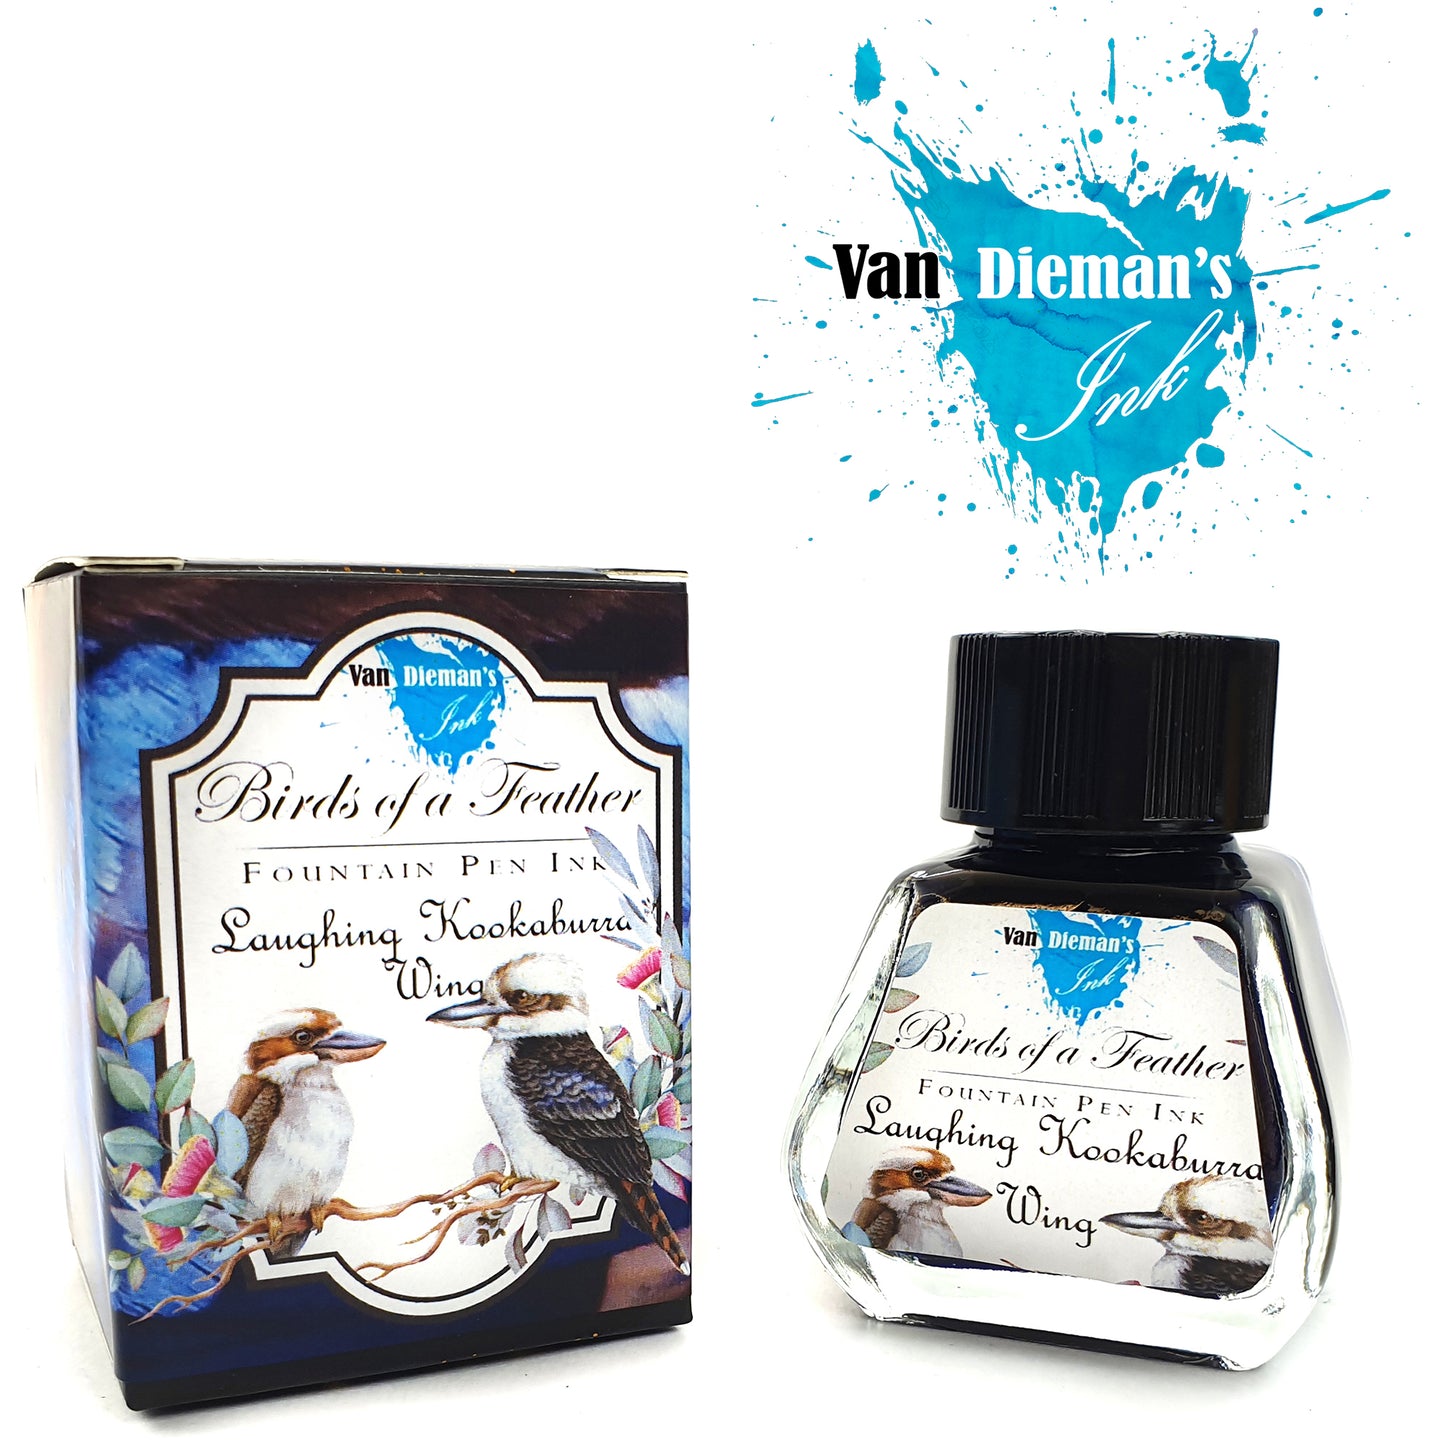 Van Dieman's Birds of a Feather - Laughing Kookaburra Wing - Fountain Pen Ink